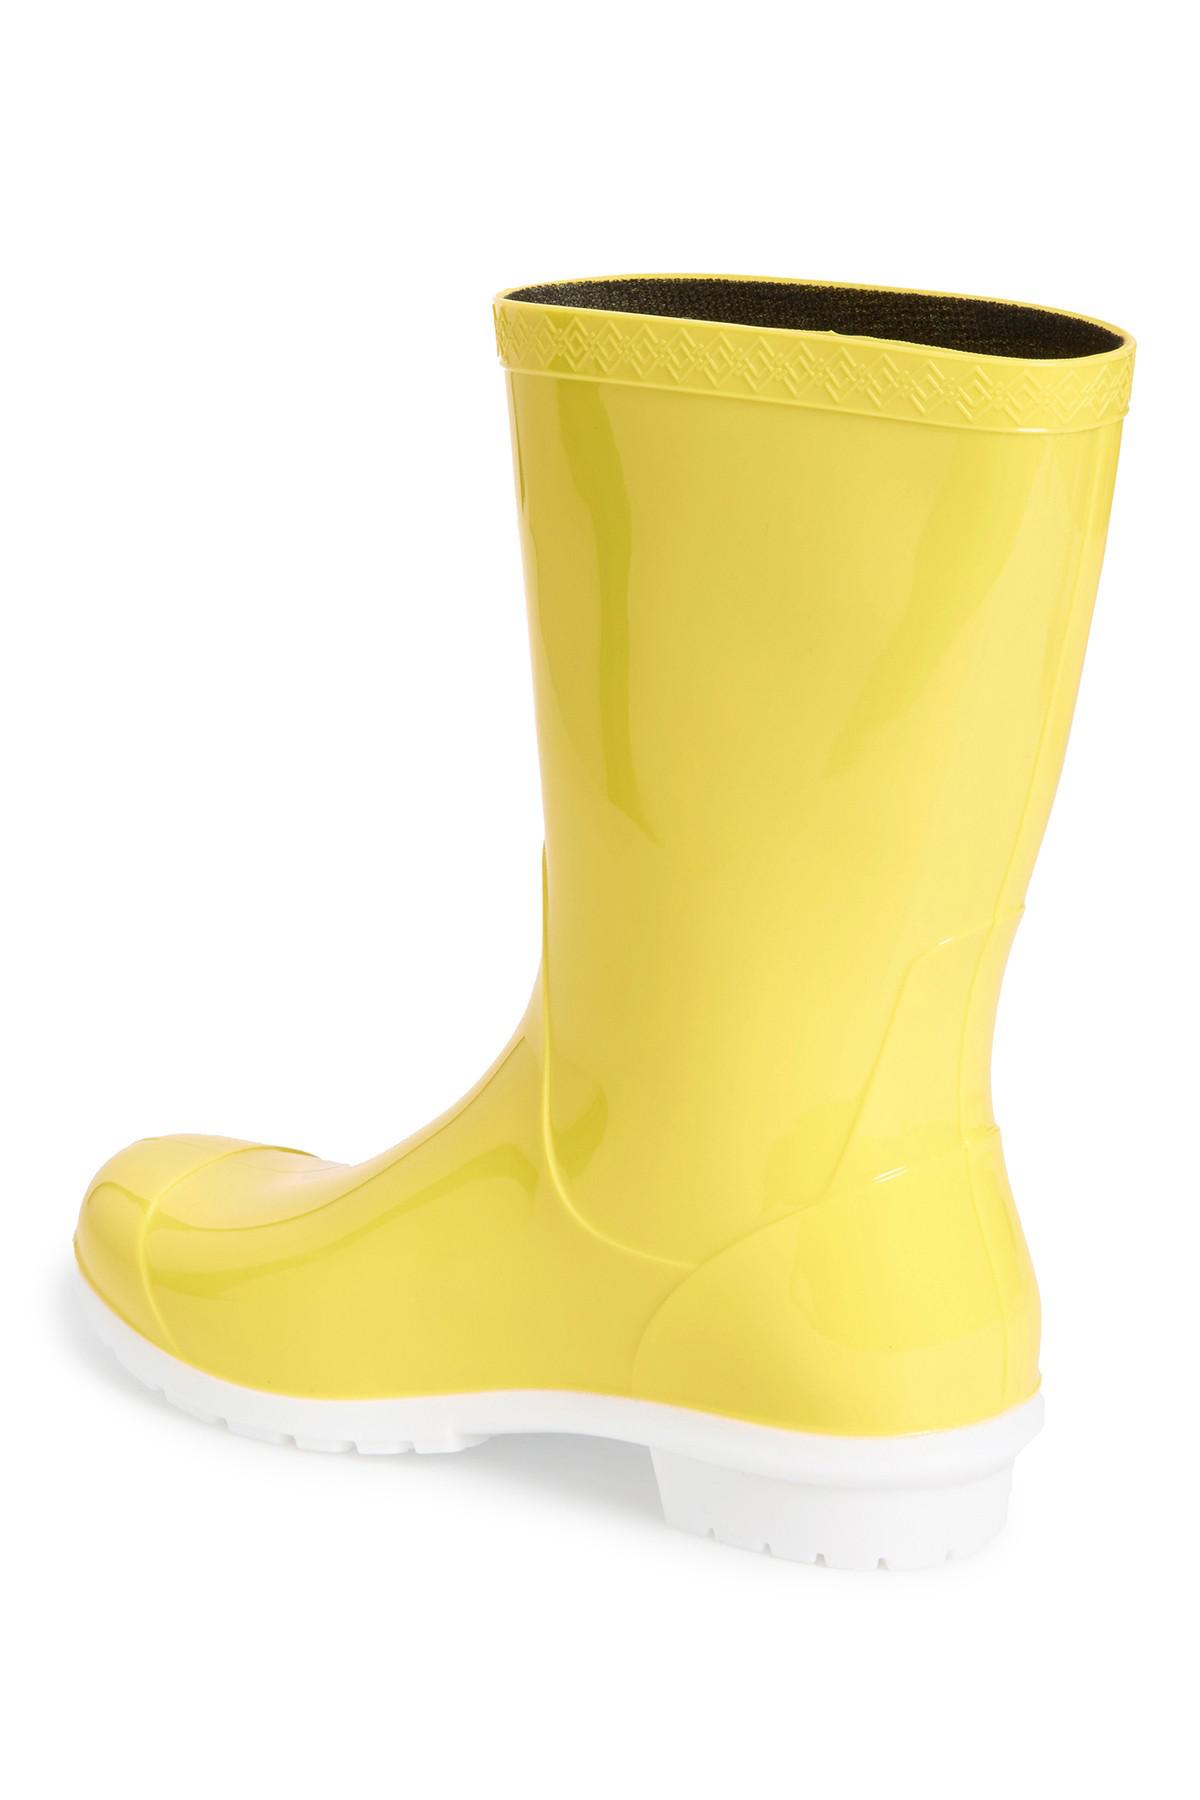 UGG Rubber Sienna Rain Boot in Yellow - Lyst